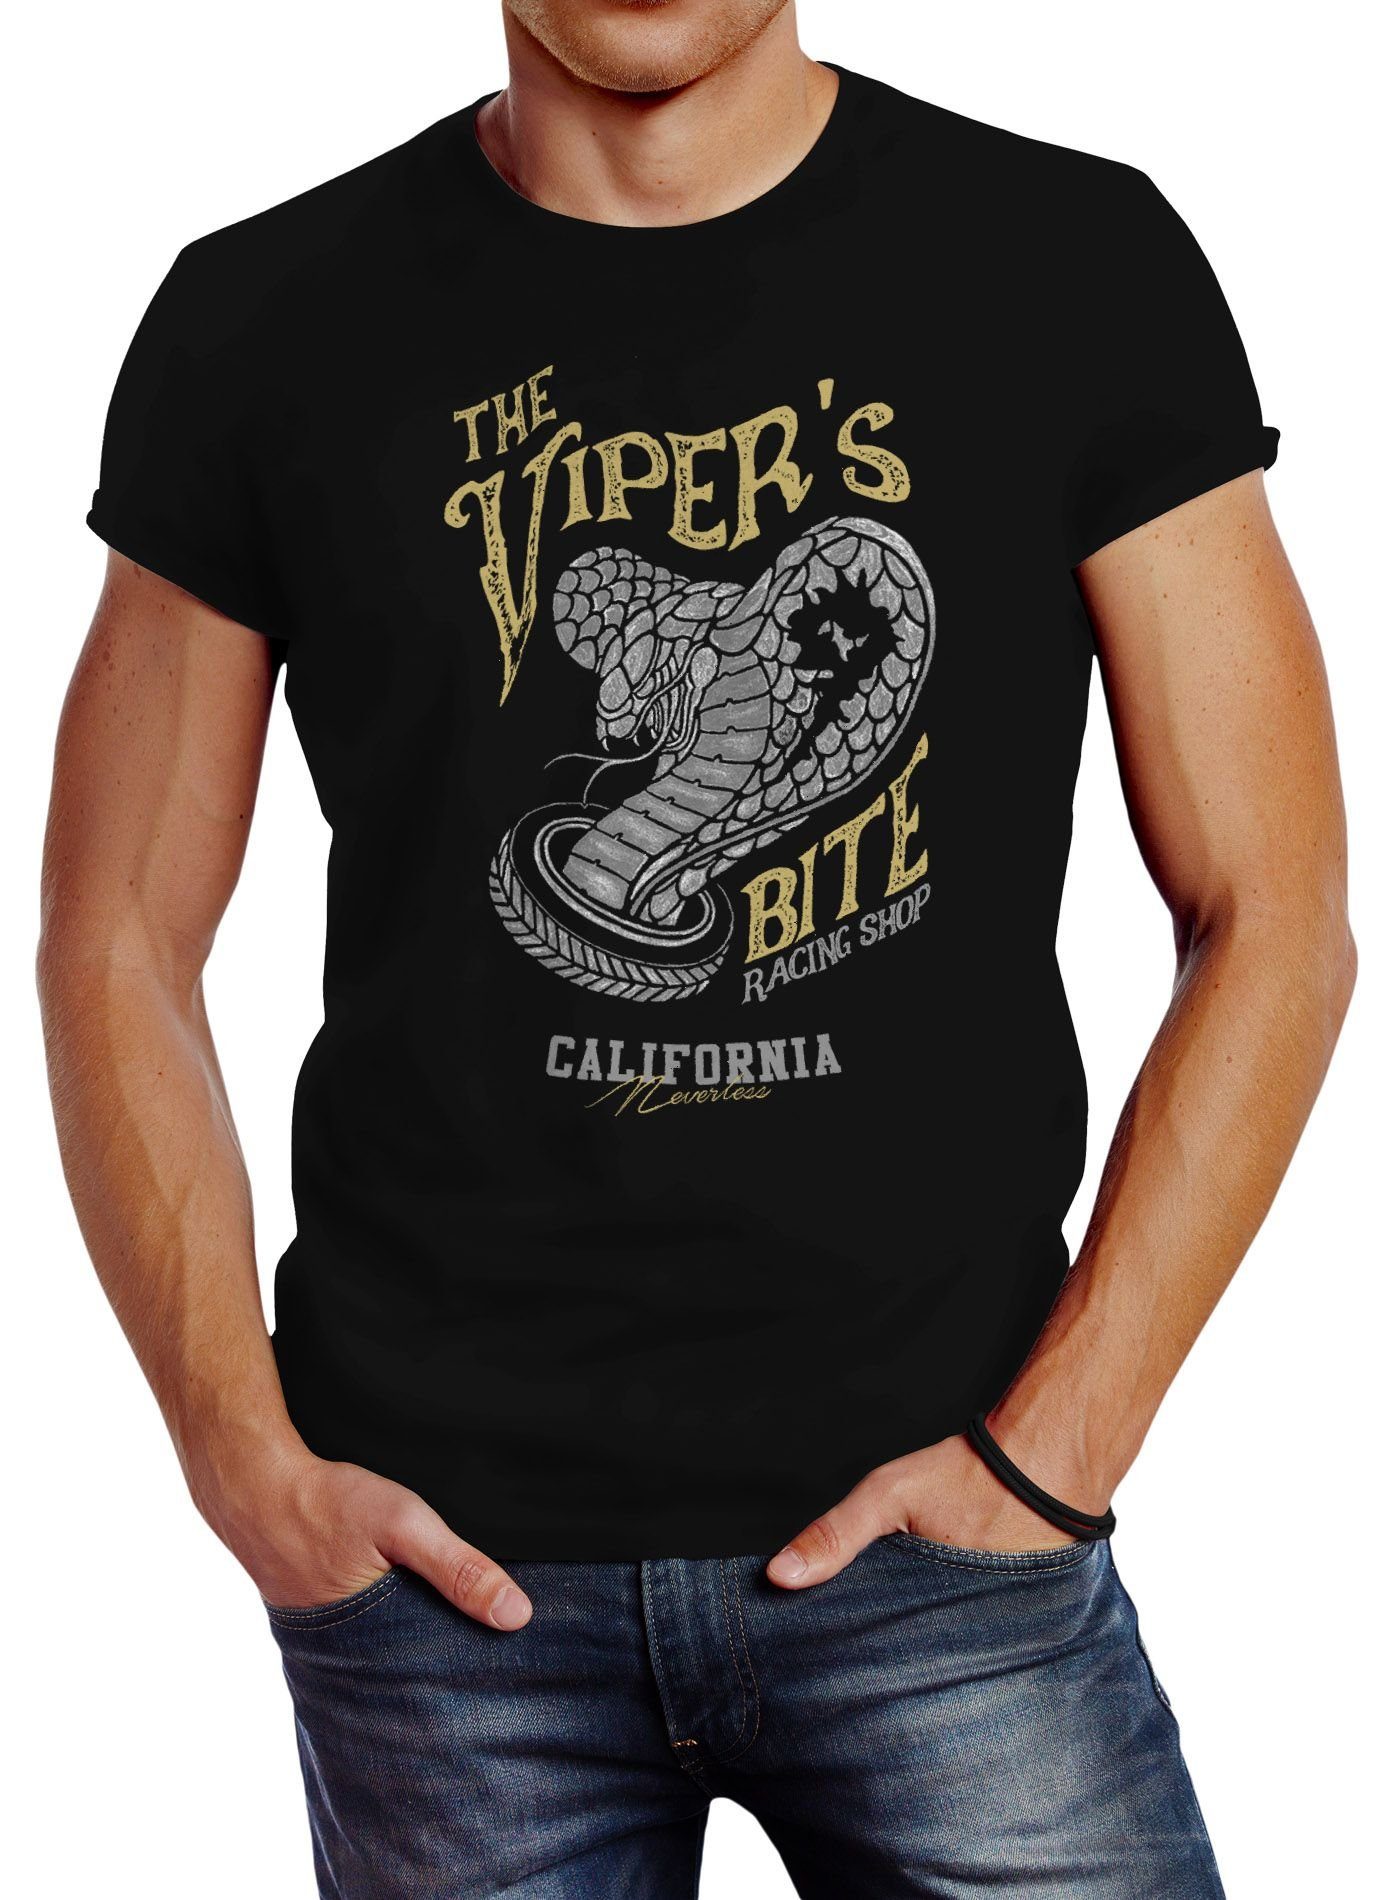 Neverless Print-Shirt Herren T-Shirt The Vipers Bite Racing Shop California Klapperschlange Tatto Style Slim Fit Neverless® mit Print schwarz